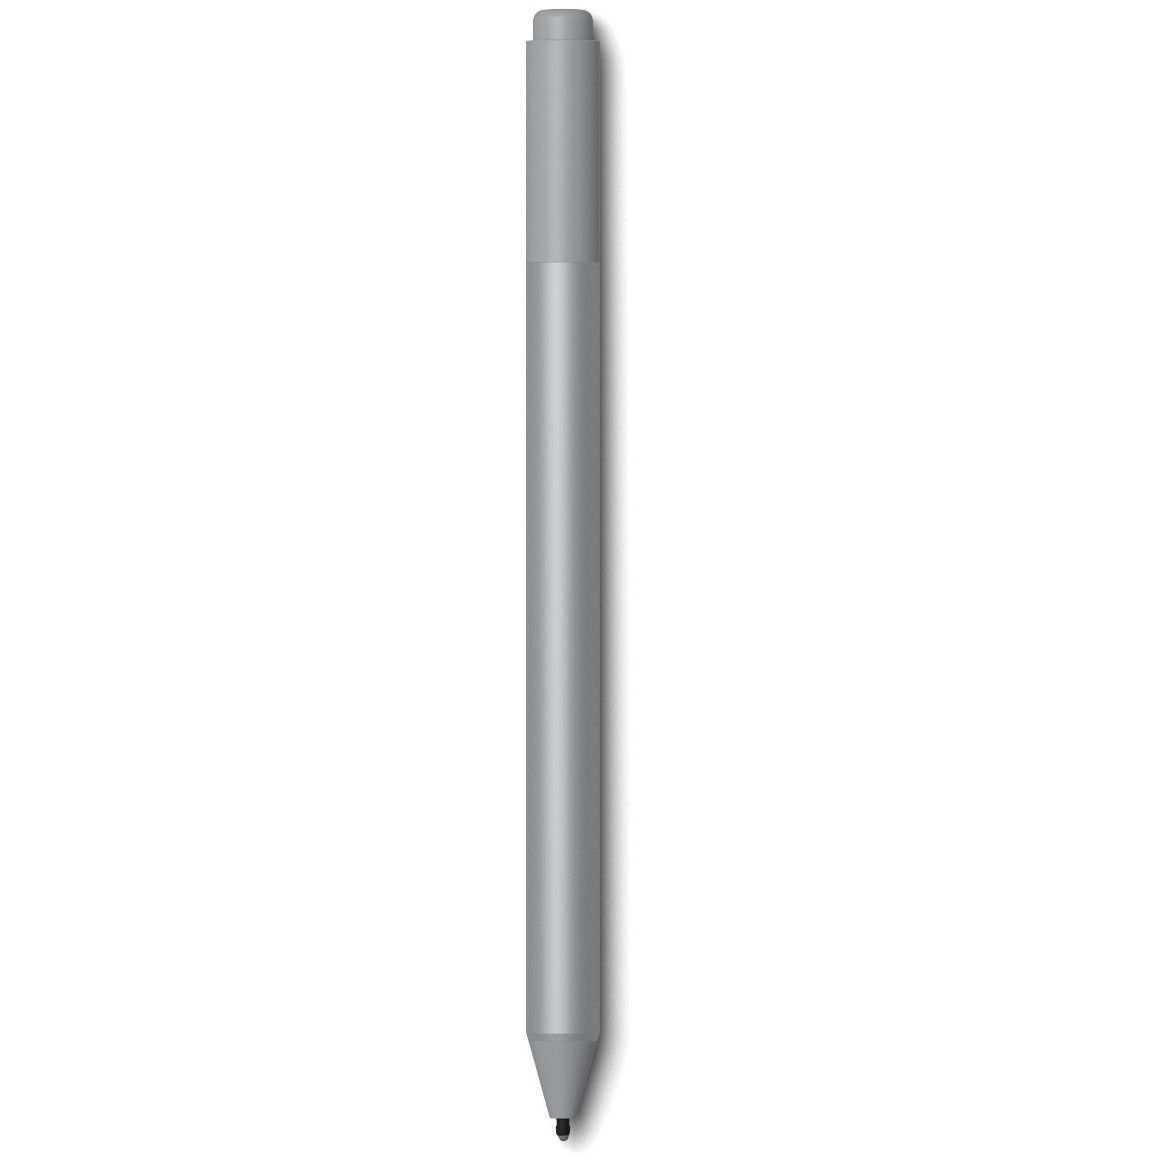 Microsoft Surface Pen stylus pen